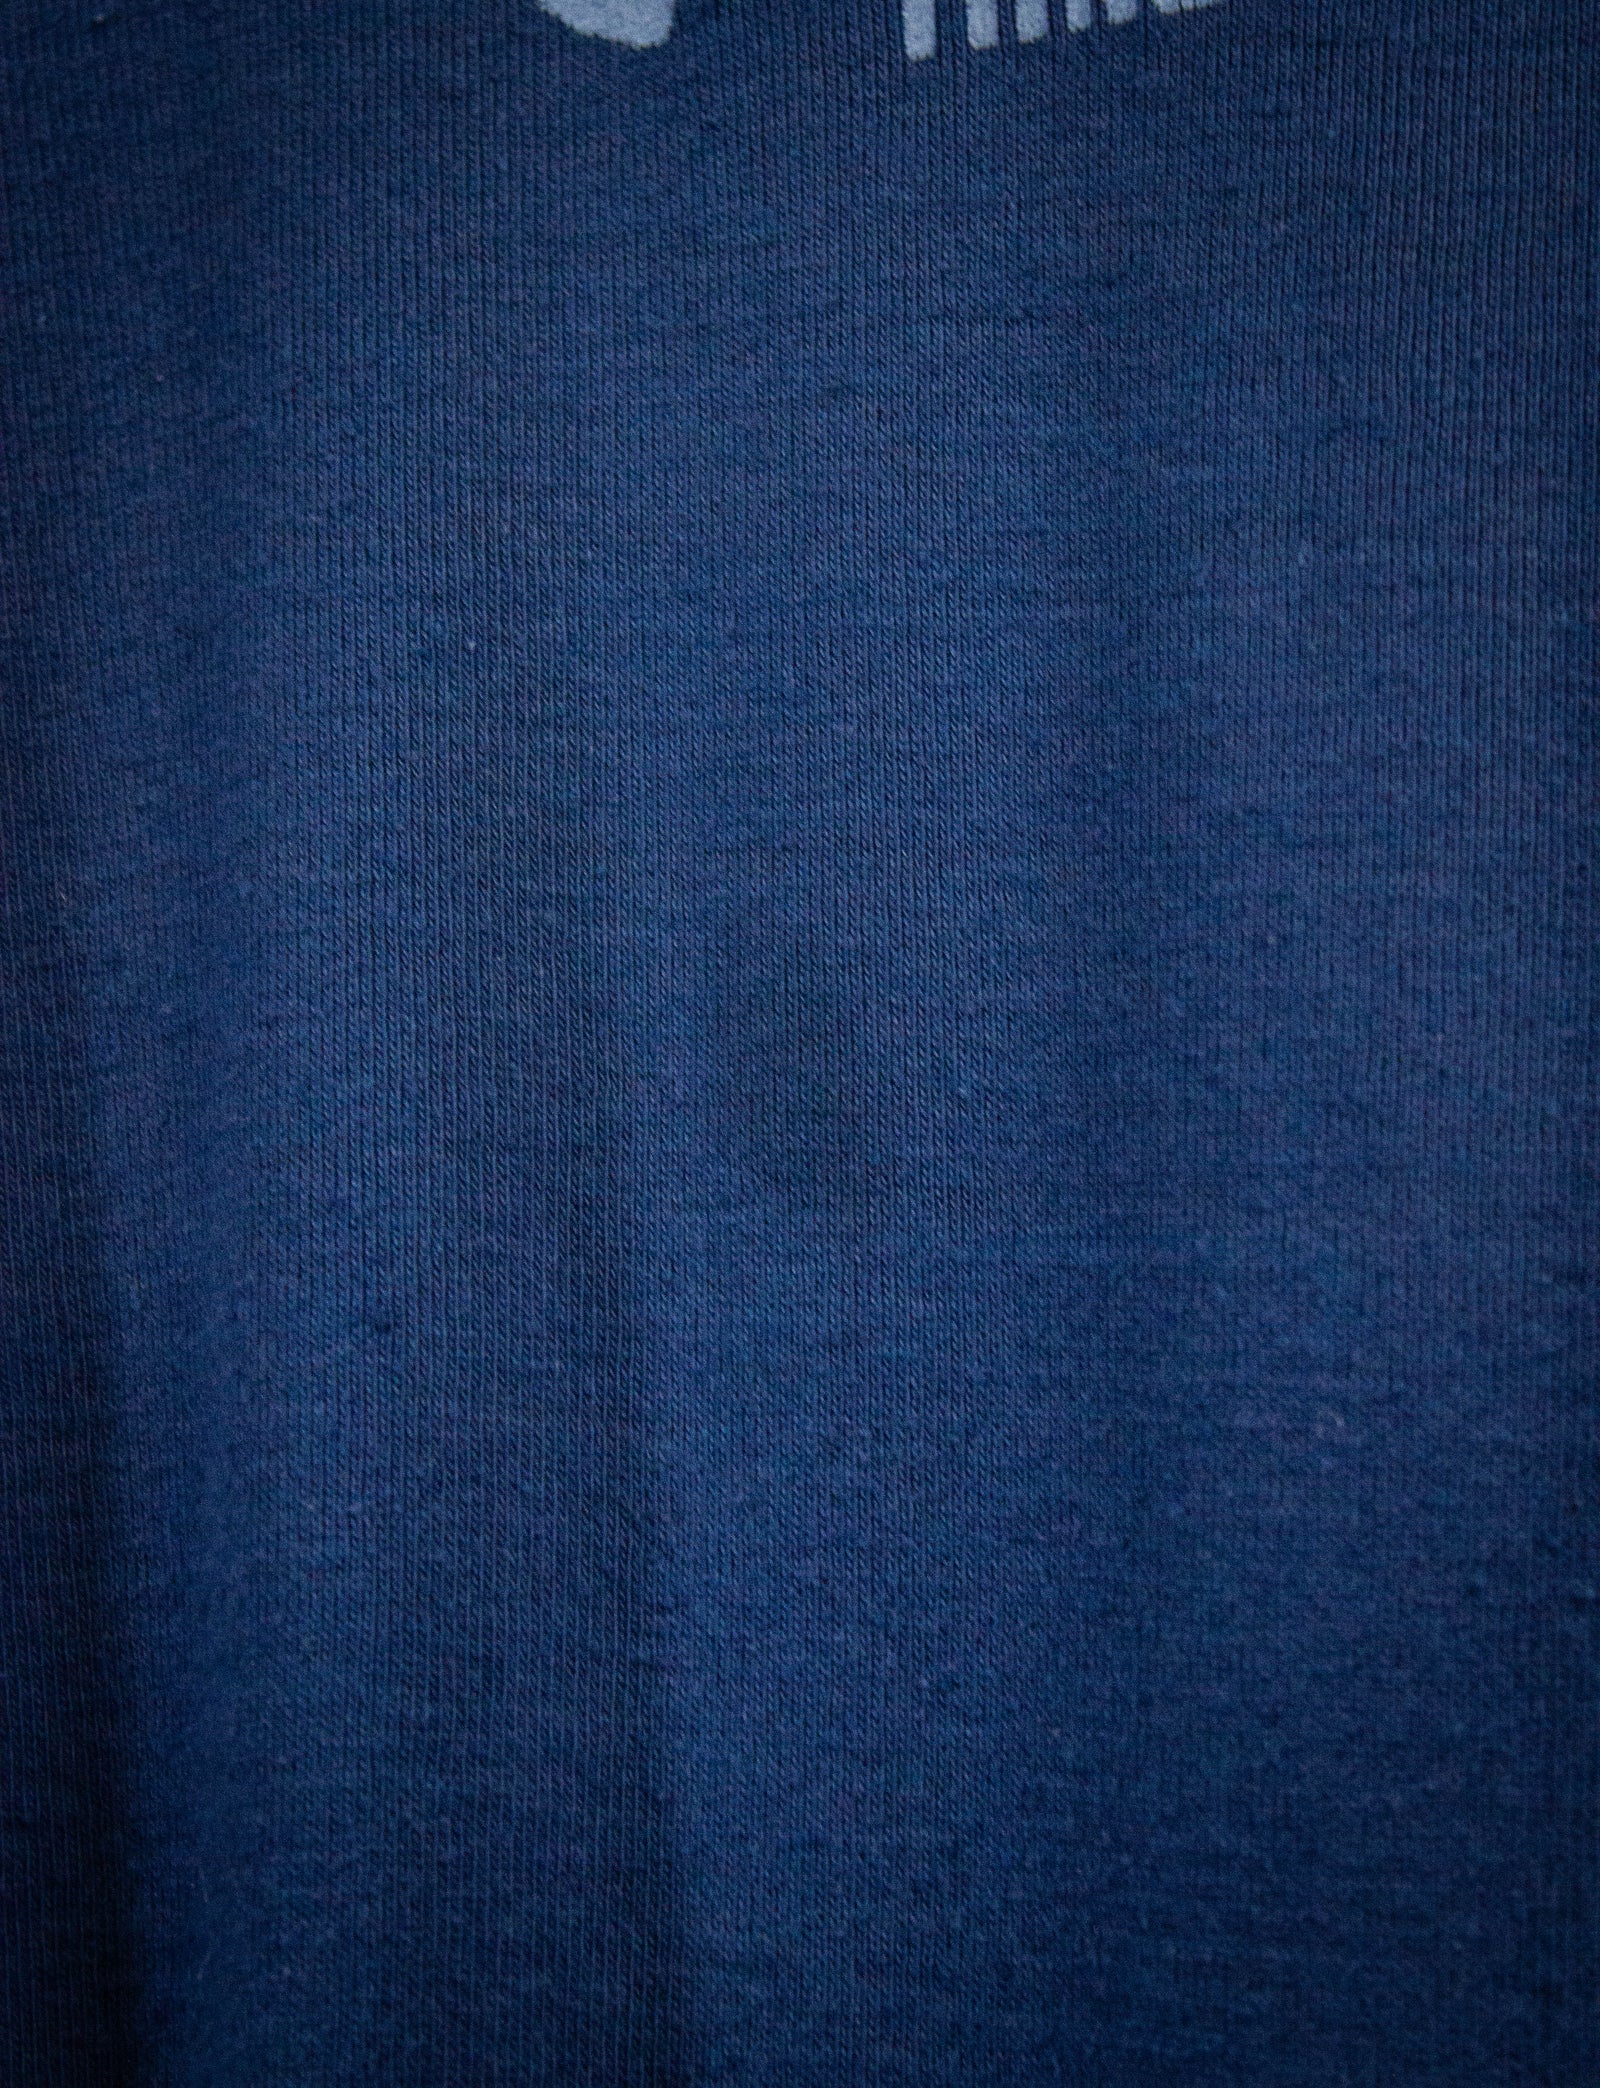 Vintage Tangerine Dream Graphic T Shirt 1975 Blue XS